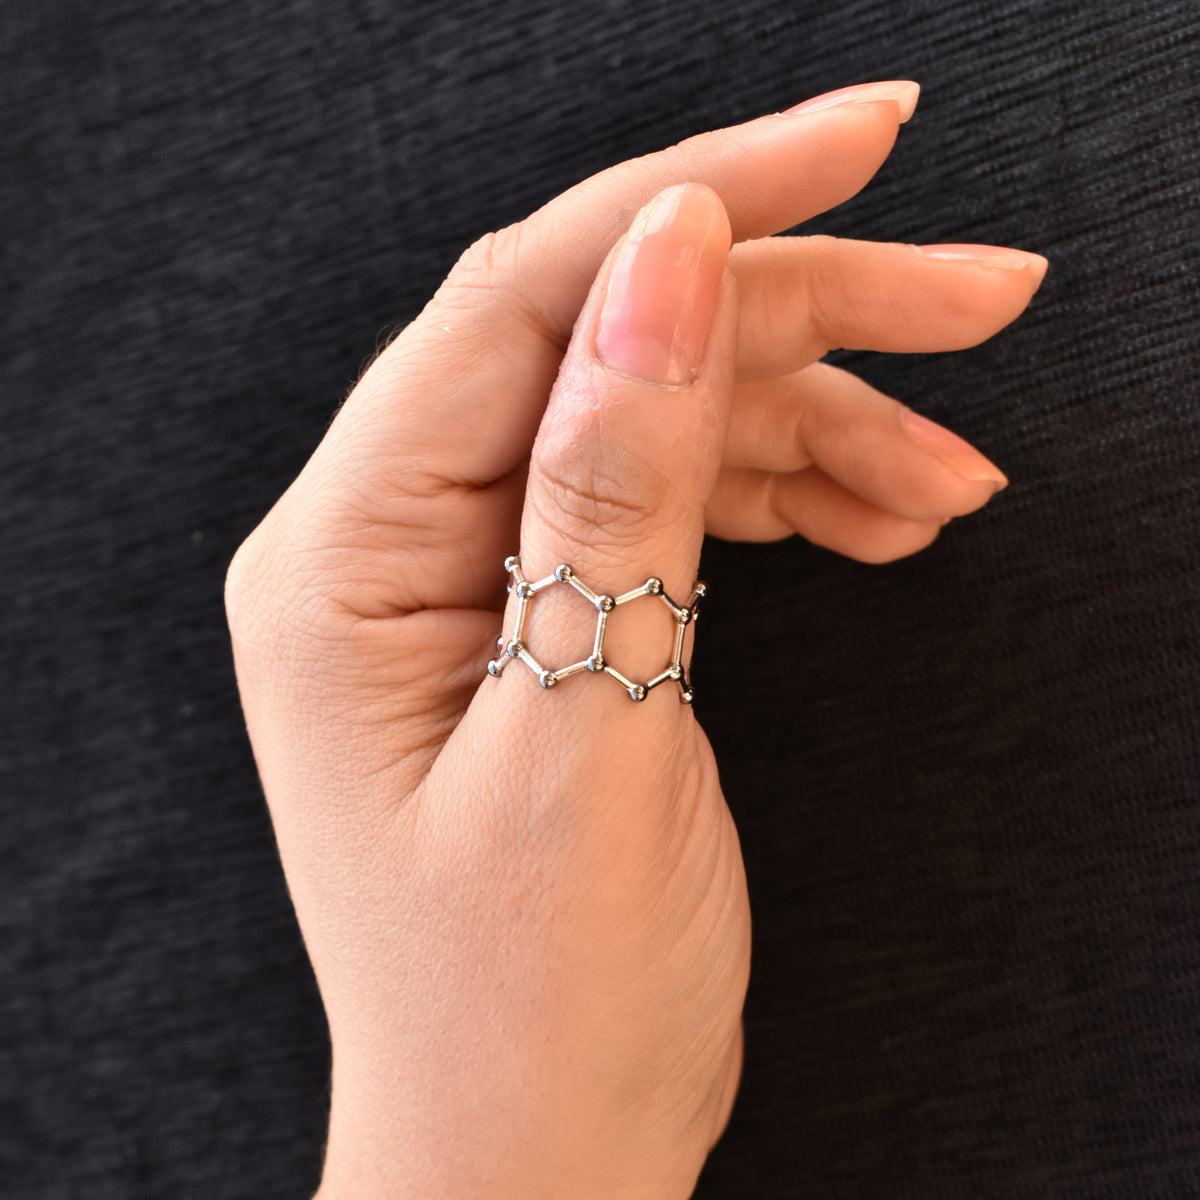 Bond with Molecules - Thumb Ring - Aliame